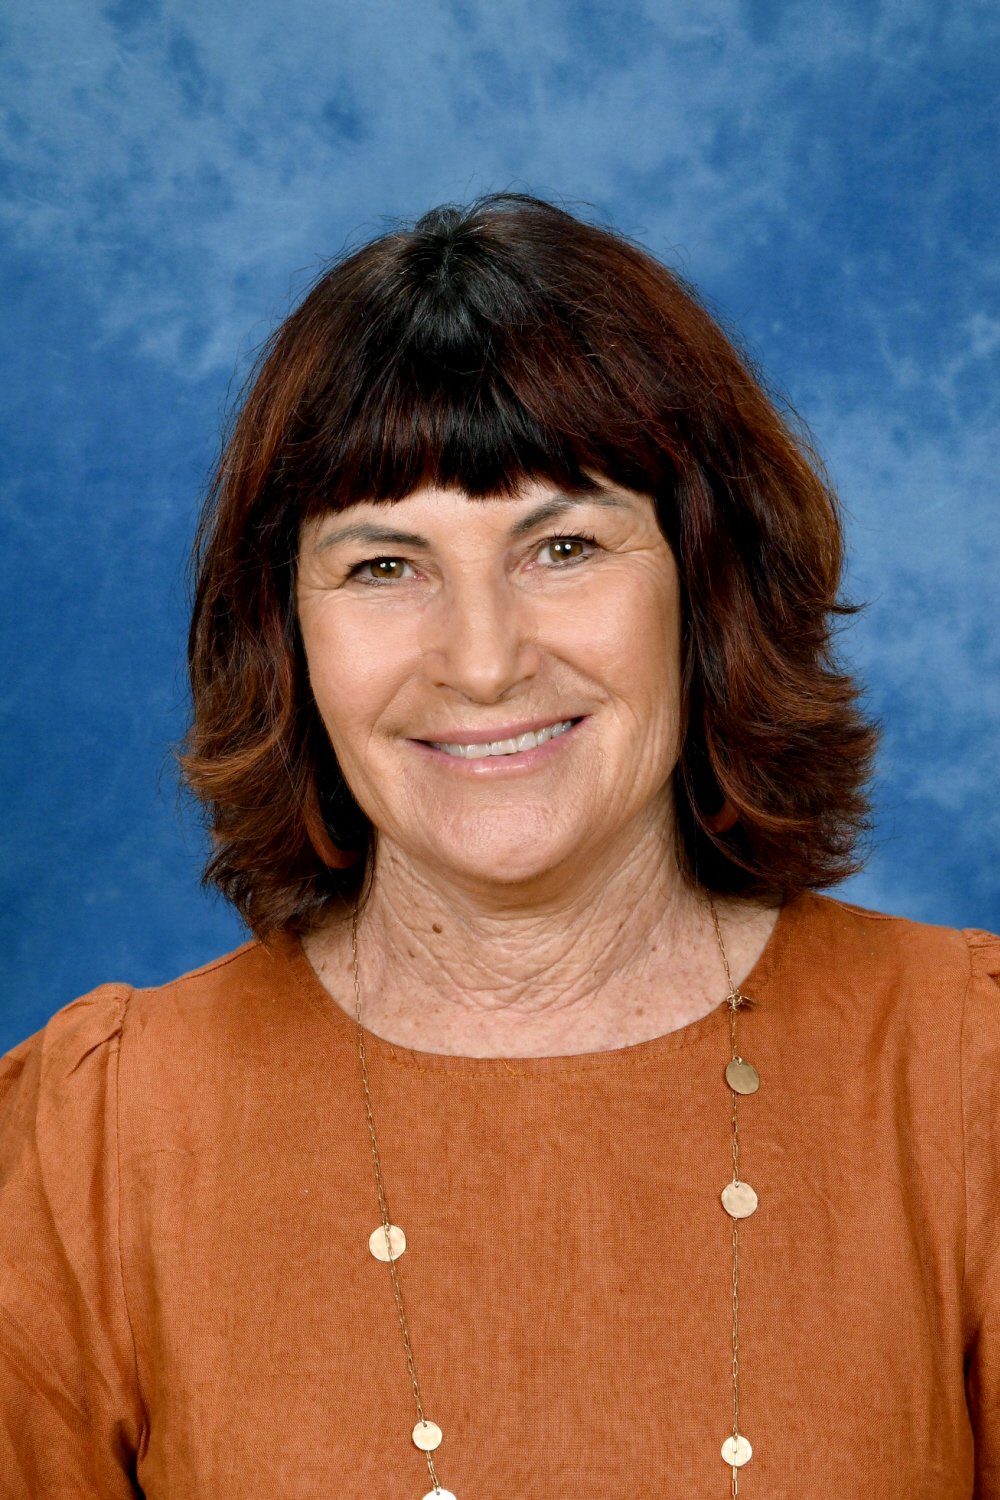 Sharon Wilkes